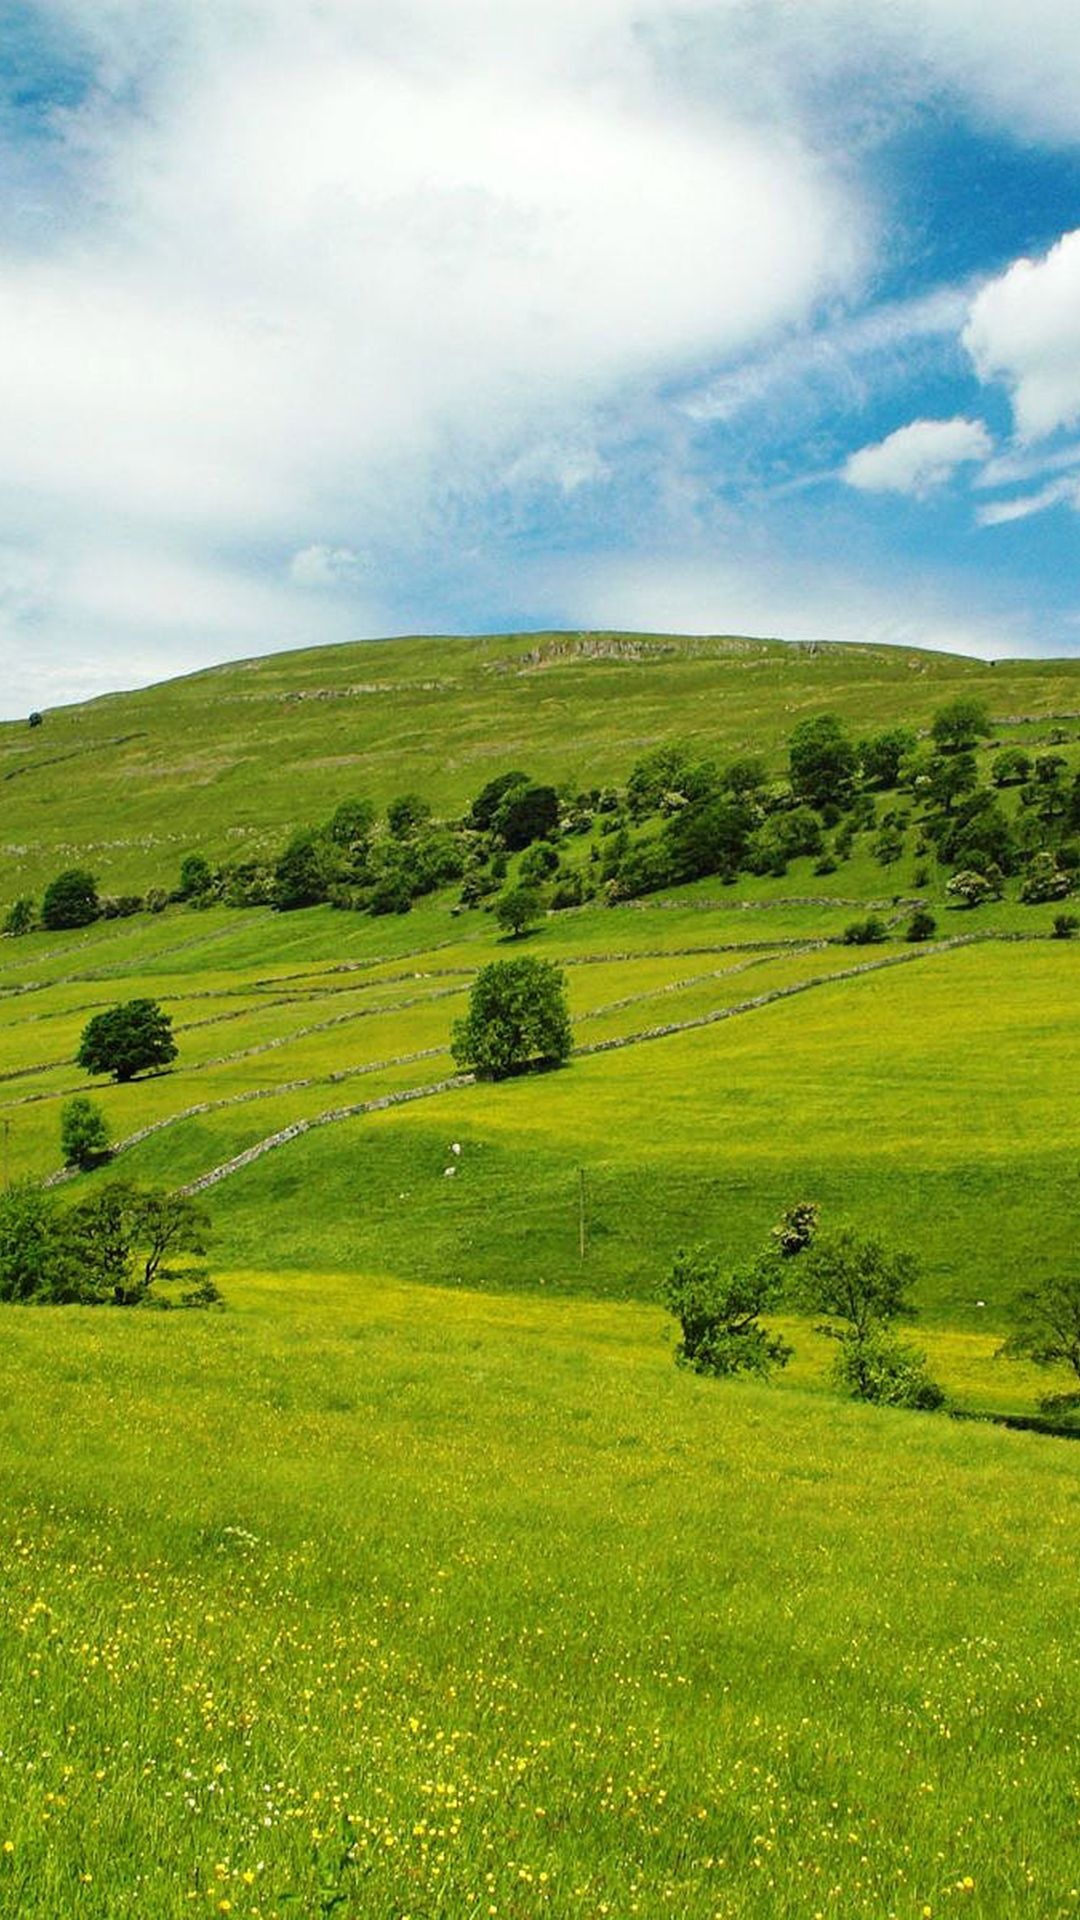 Grassland: Green pastures, Bucolic surroundings, Natural environment, Fresh air, Hills. 1080x1920 Full HD Wallpaper.